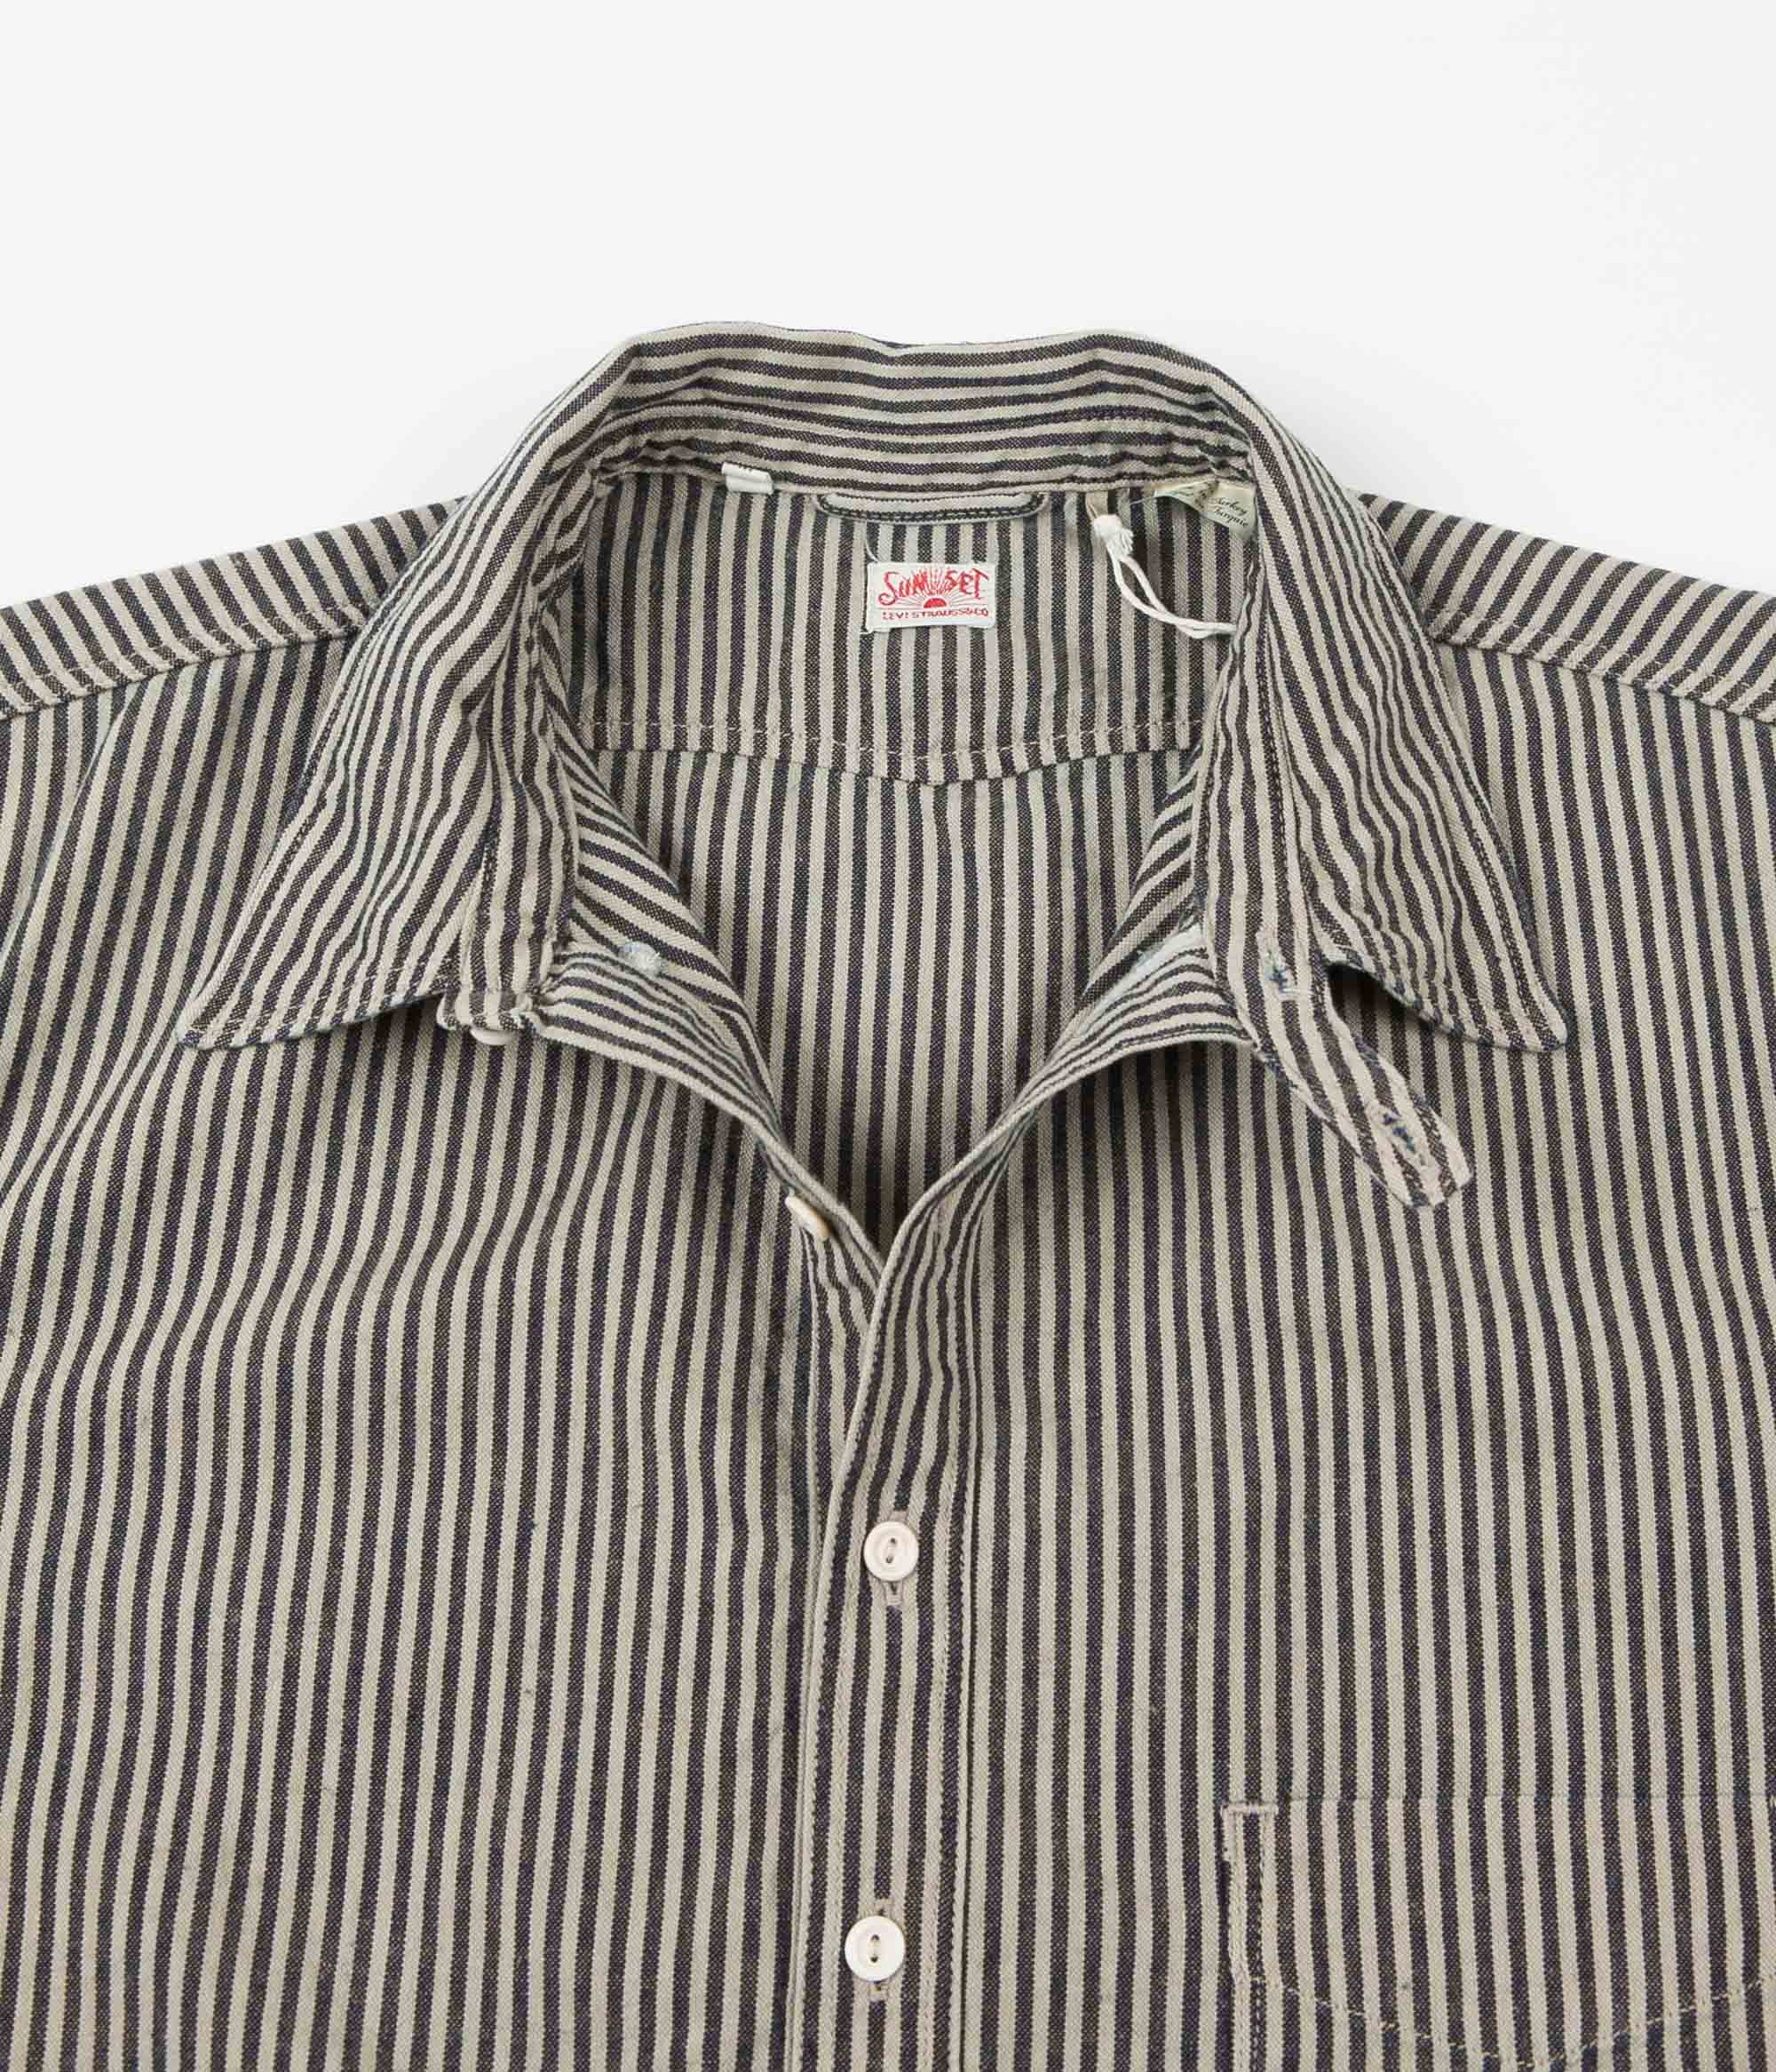 levis vintage clothing shirt